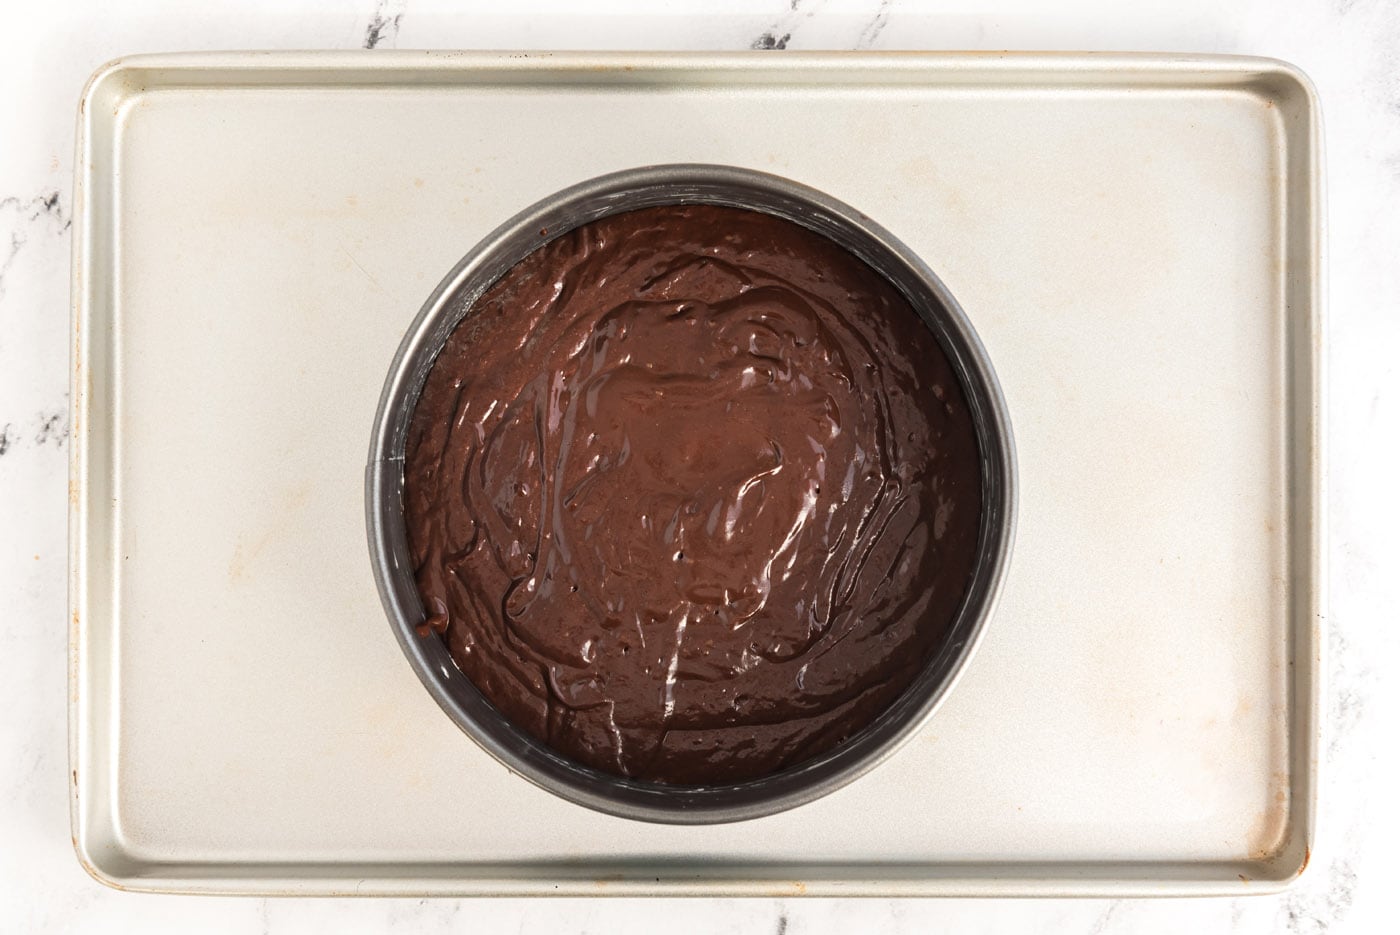 dark chocolate cake batter in a springform pan